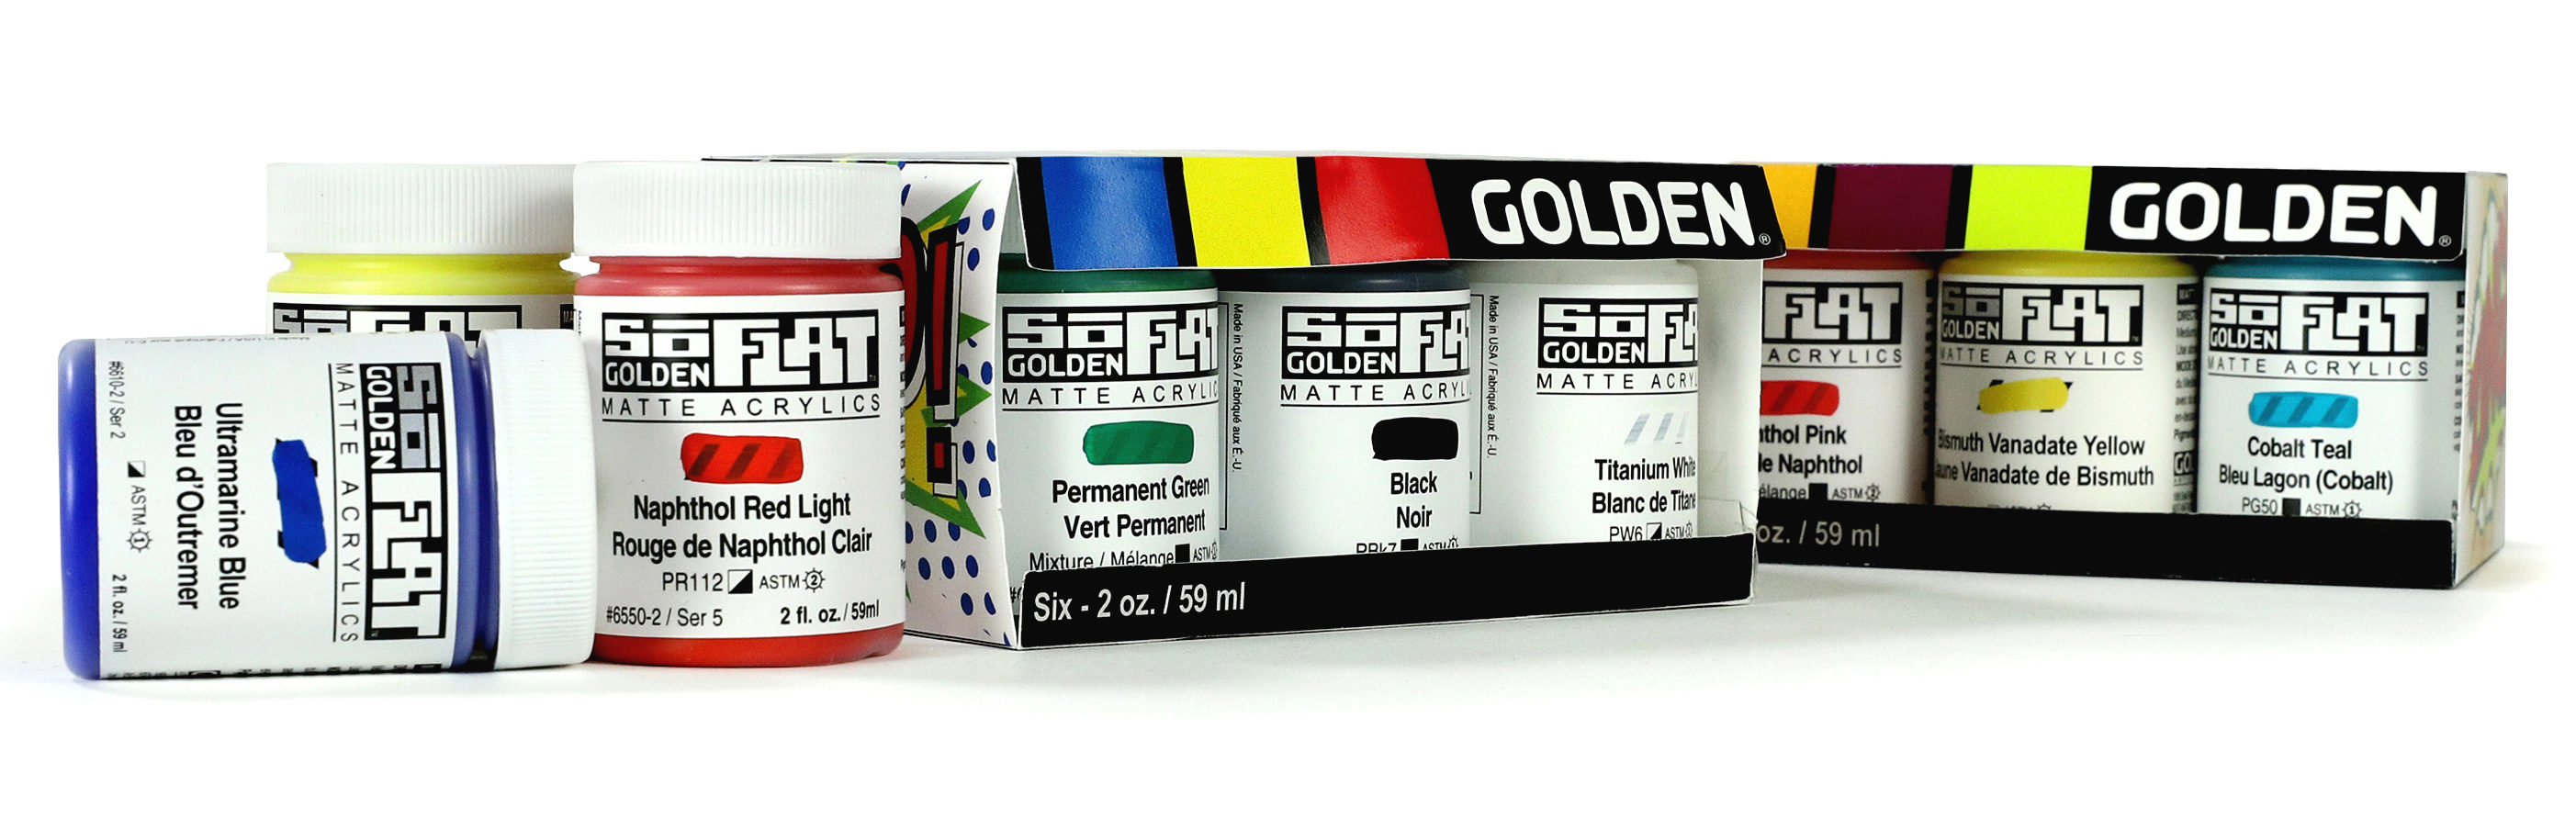 Golden SoFlat Matte Acrylic 2 oz Pyrrole Red